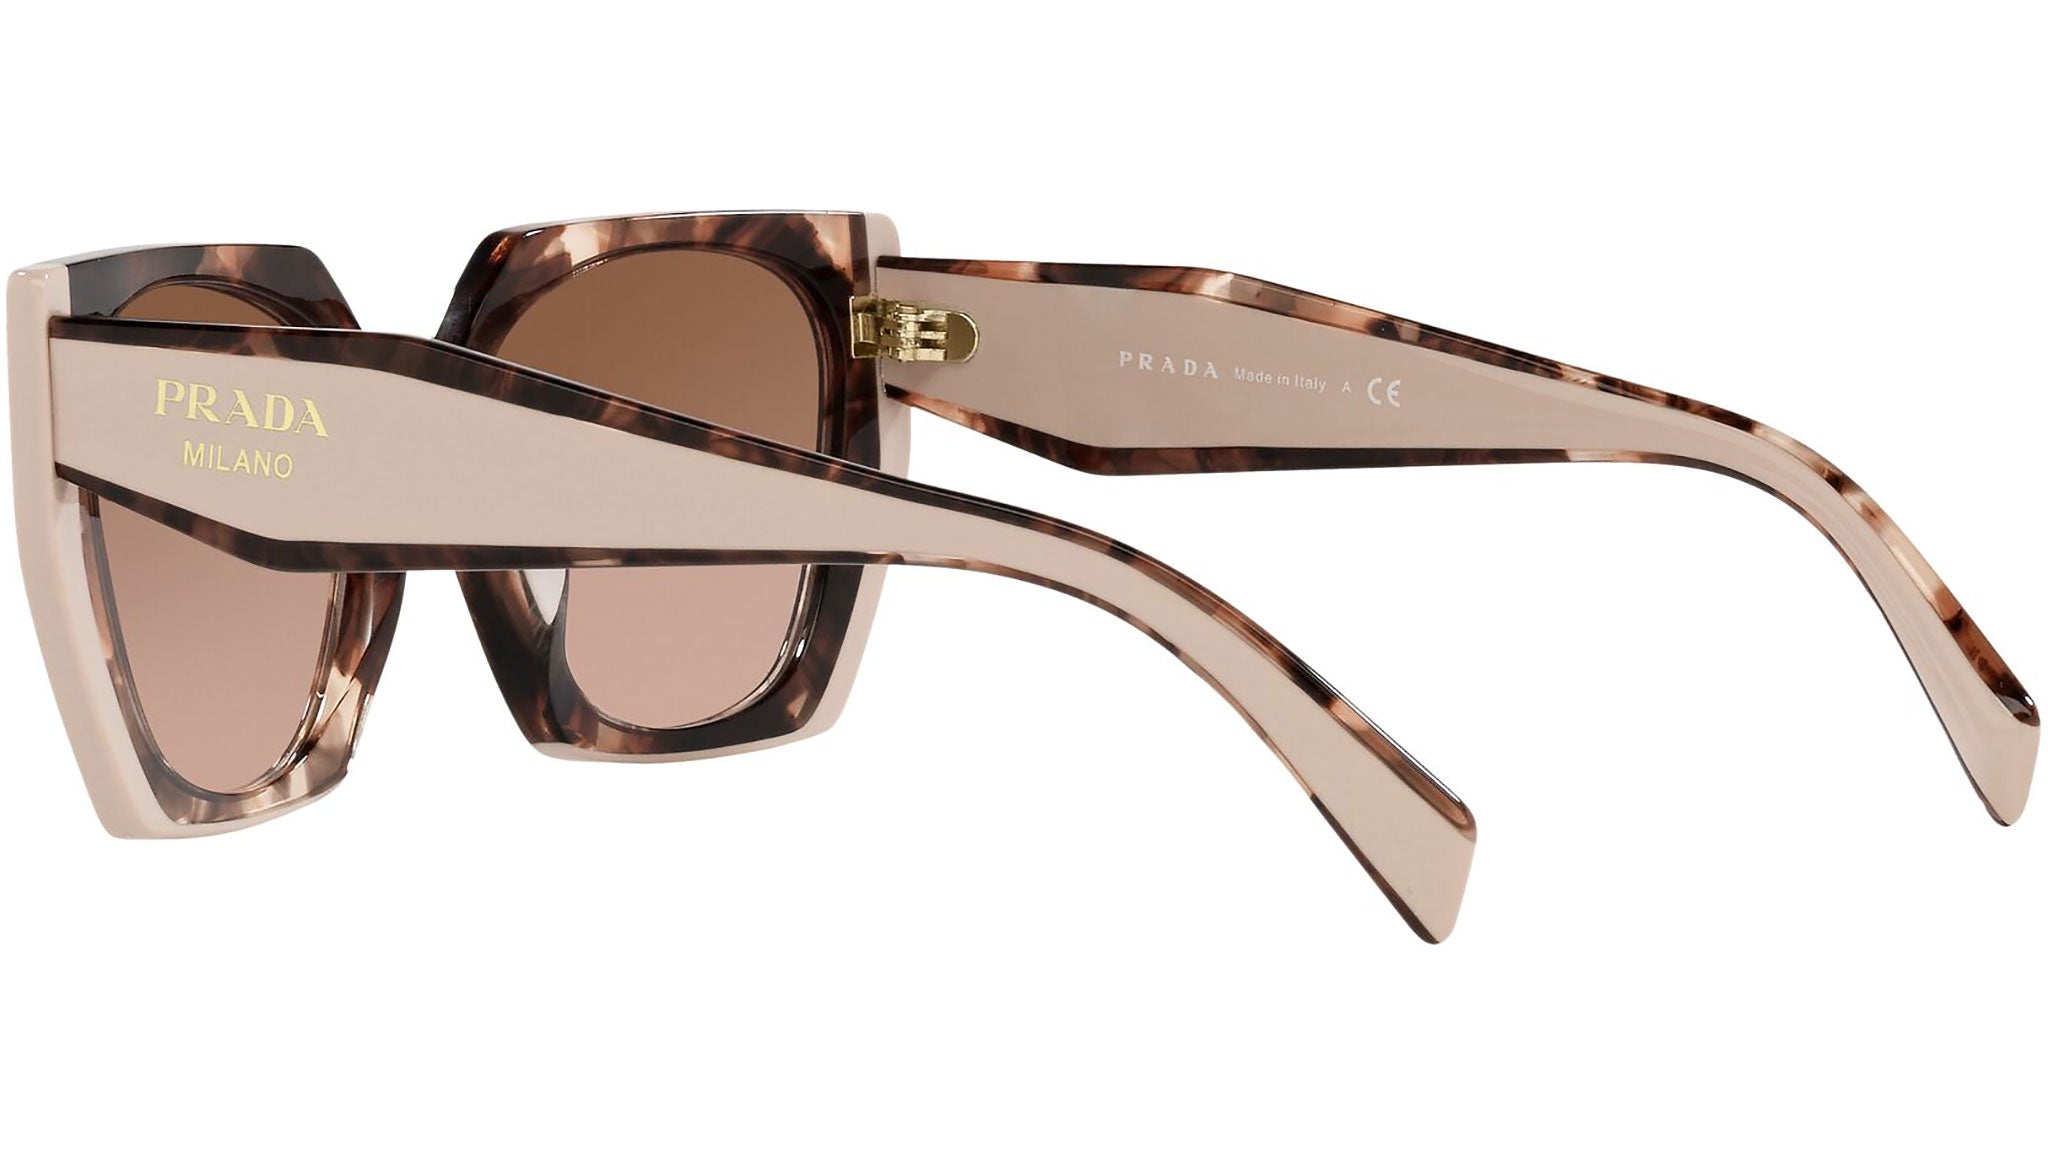 Prada Prada Eyewear Collection sunglasses for Women - Brown in UAE | Level  Shoes